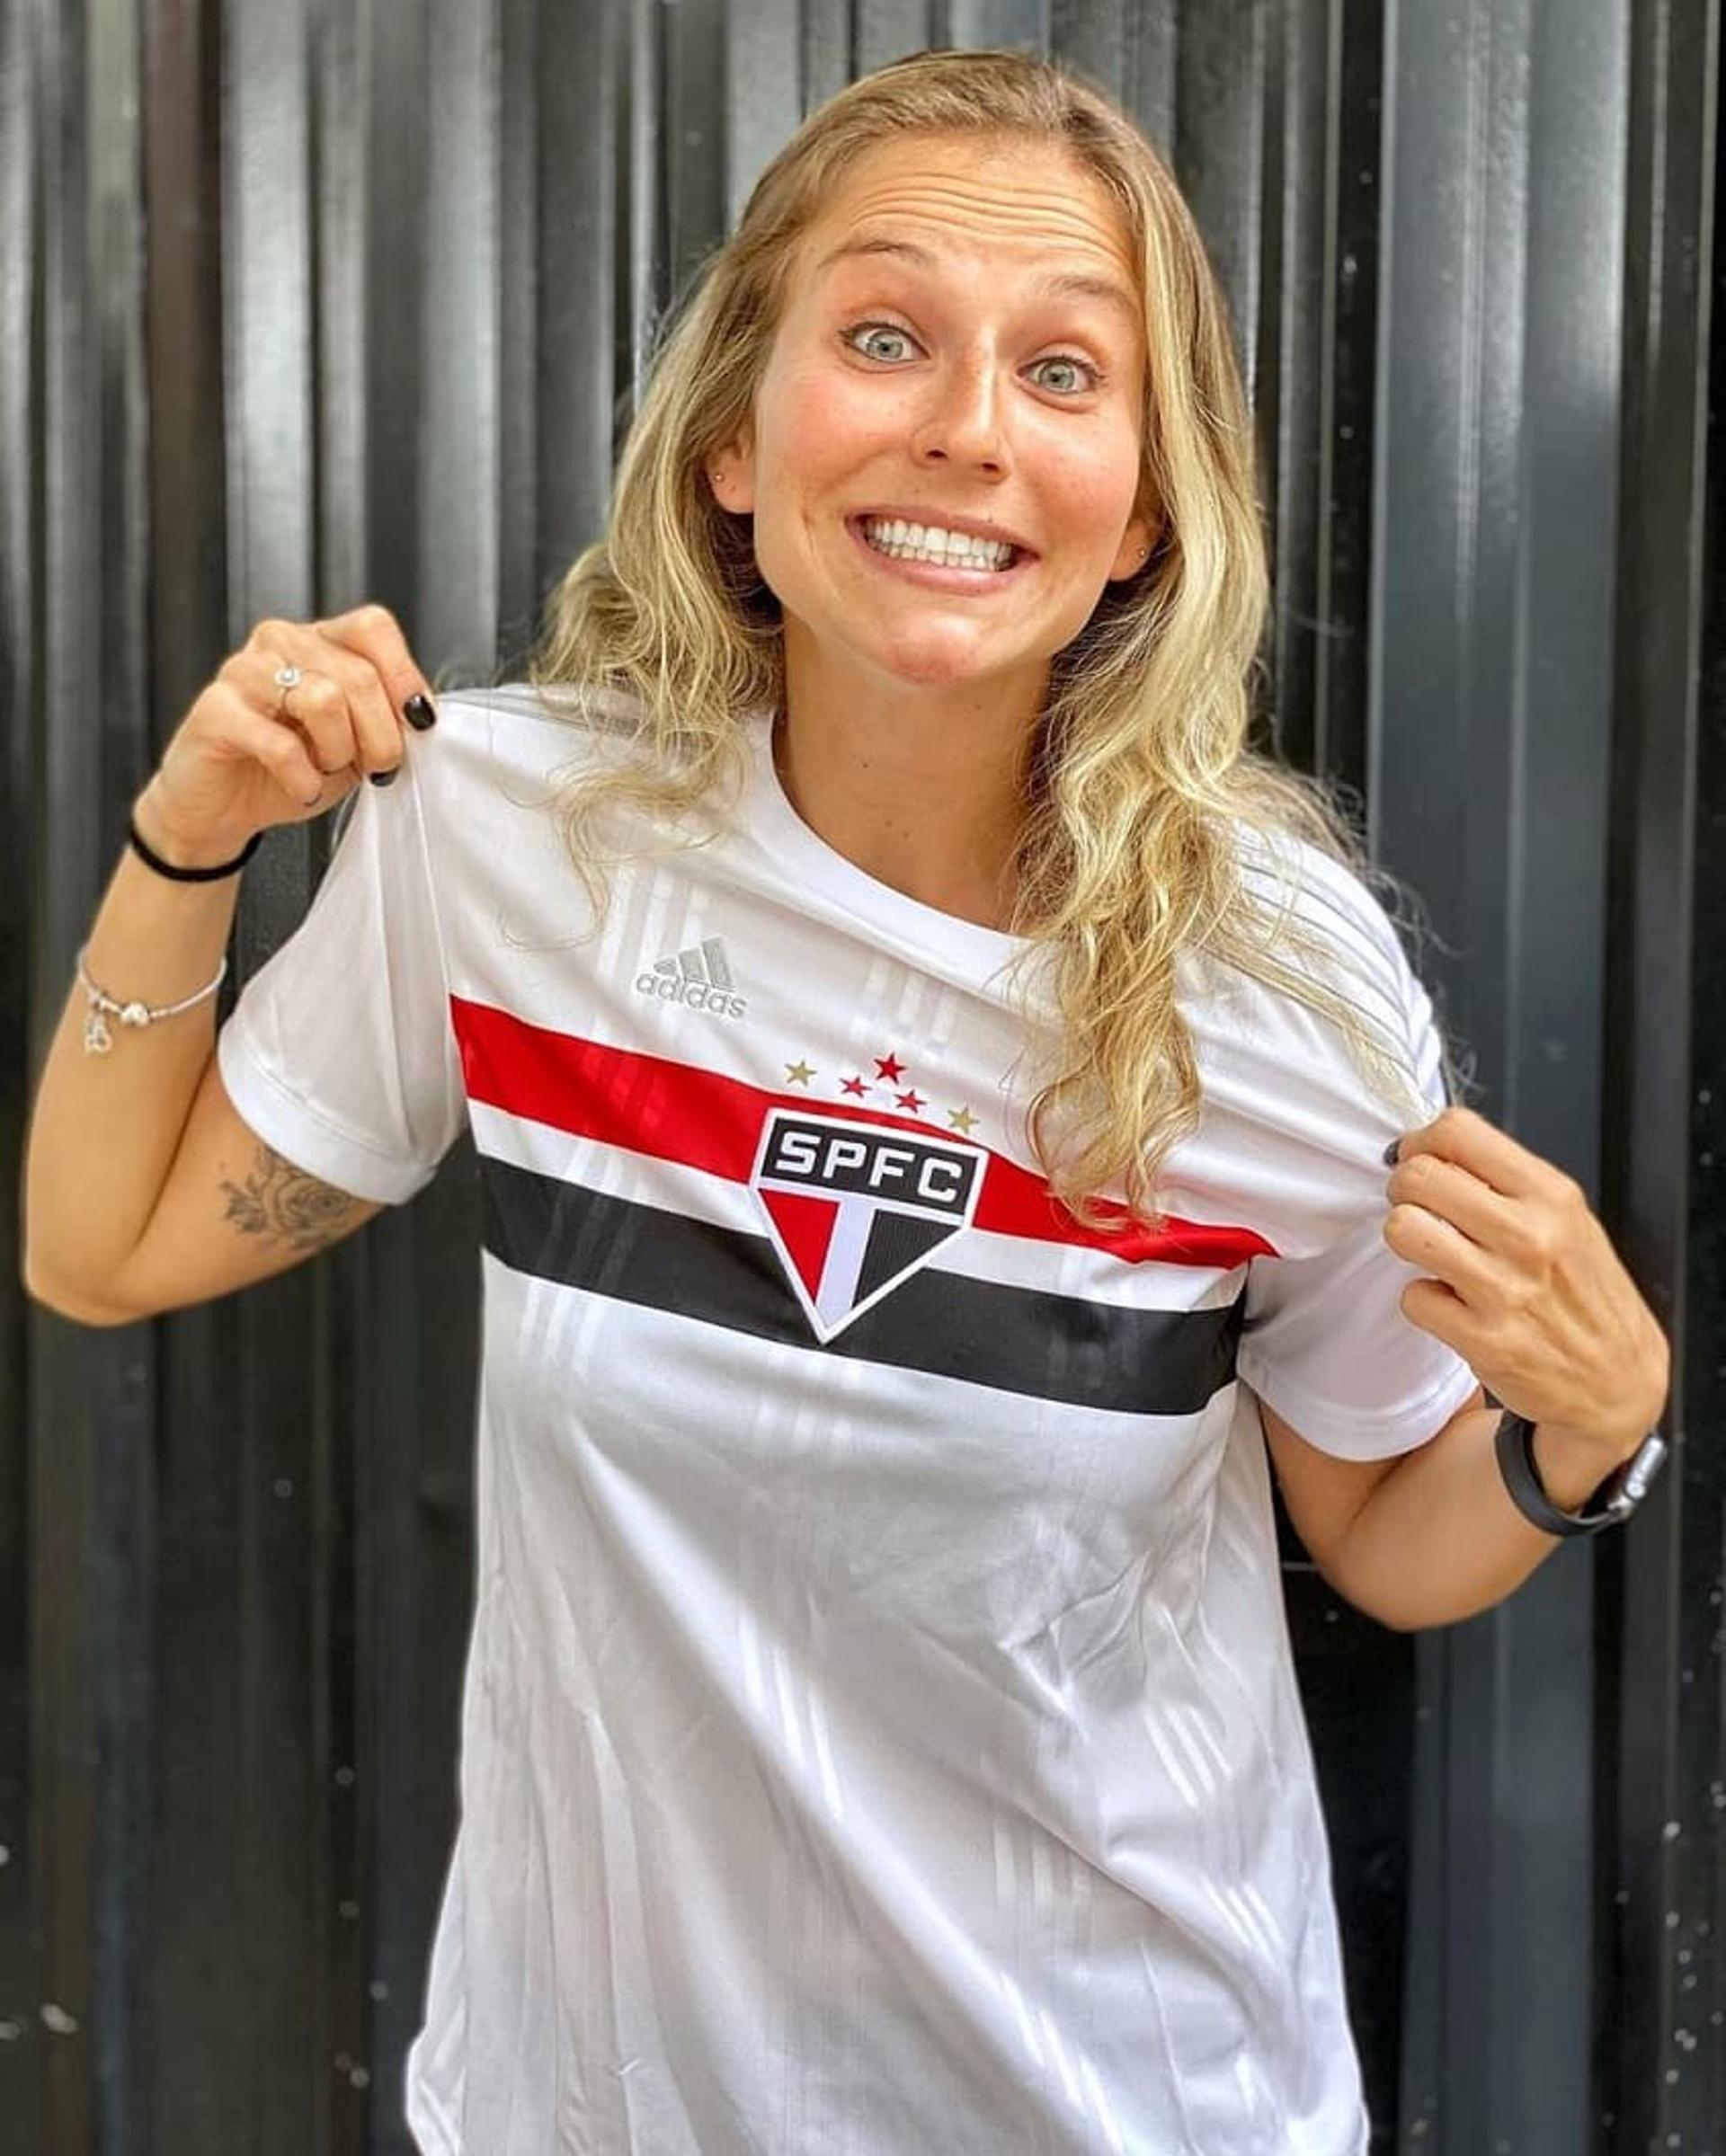 Camisa Nova São Paulo